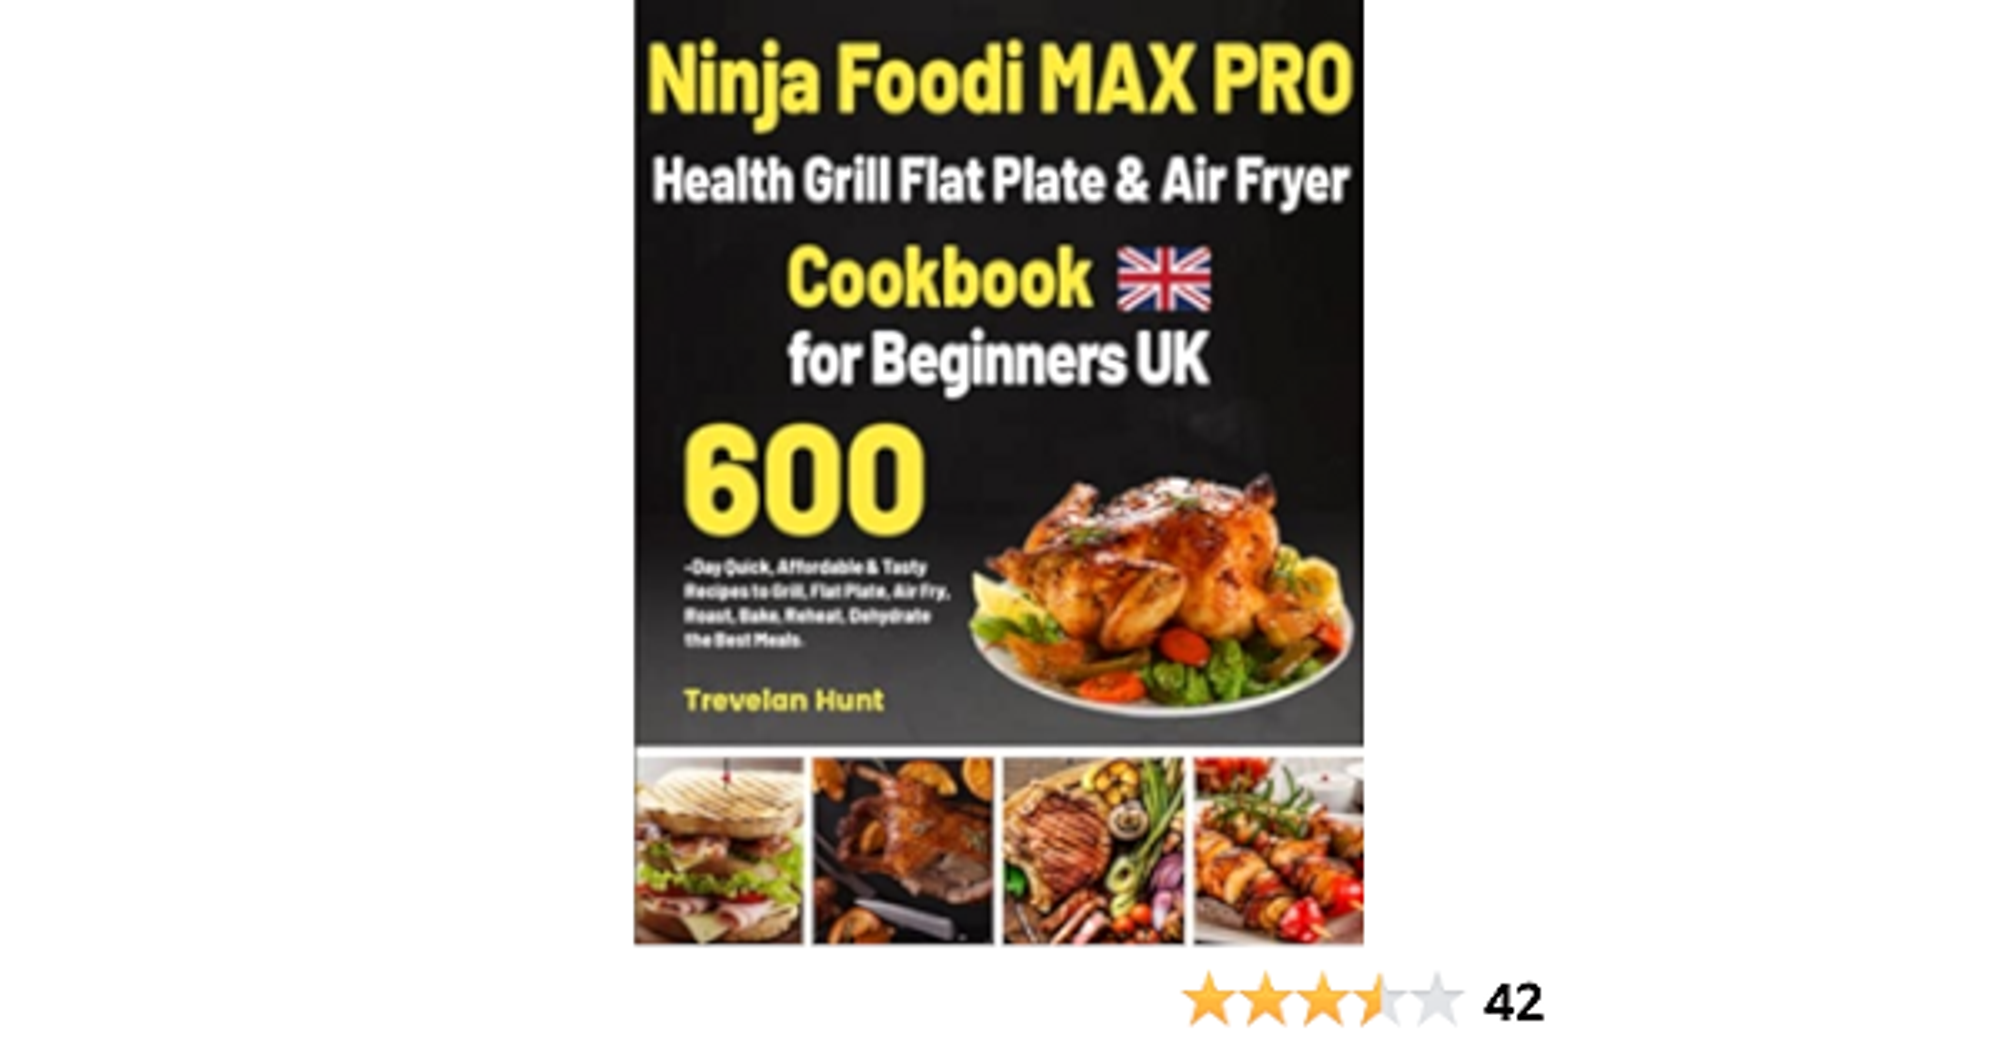 Ninja Foodi MAX PRO Health Grill, Flat Plate & Air Fryer Cookbook for Beginners UK: Quick, Affordable & Tasty Recipes to Grill, Flat Plate, Air Fry, Roast, Bake, Reheat, Dehydrate the Best Mea